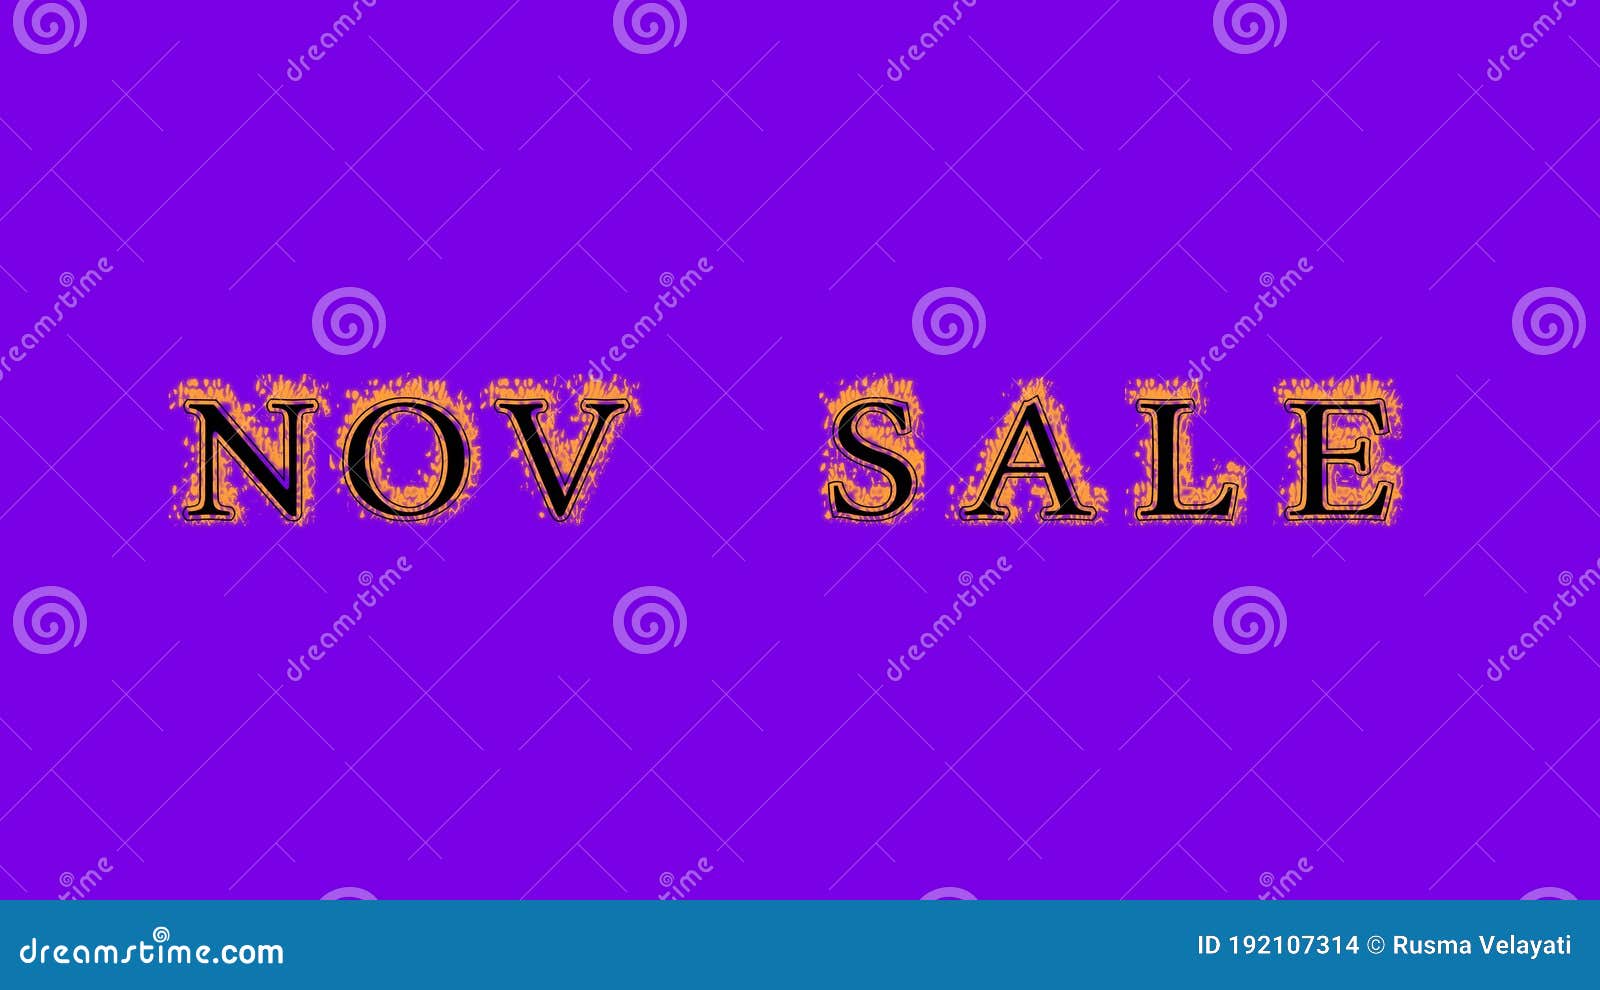 nov sale fire text effect violet background